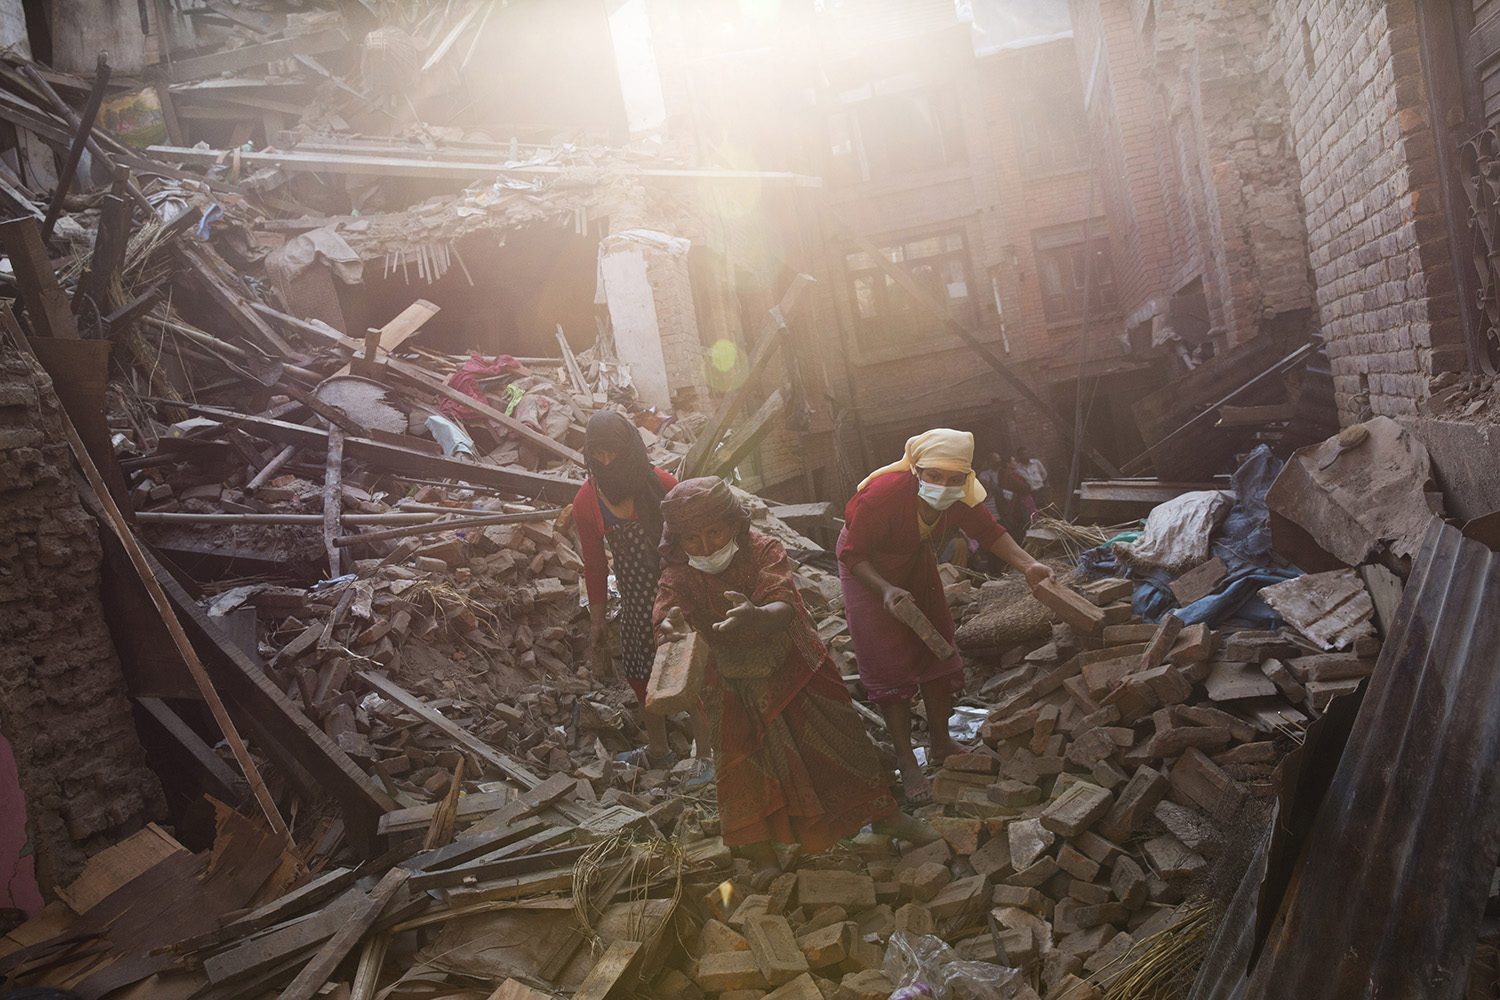 APTOPIX Nepal Earthquake